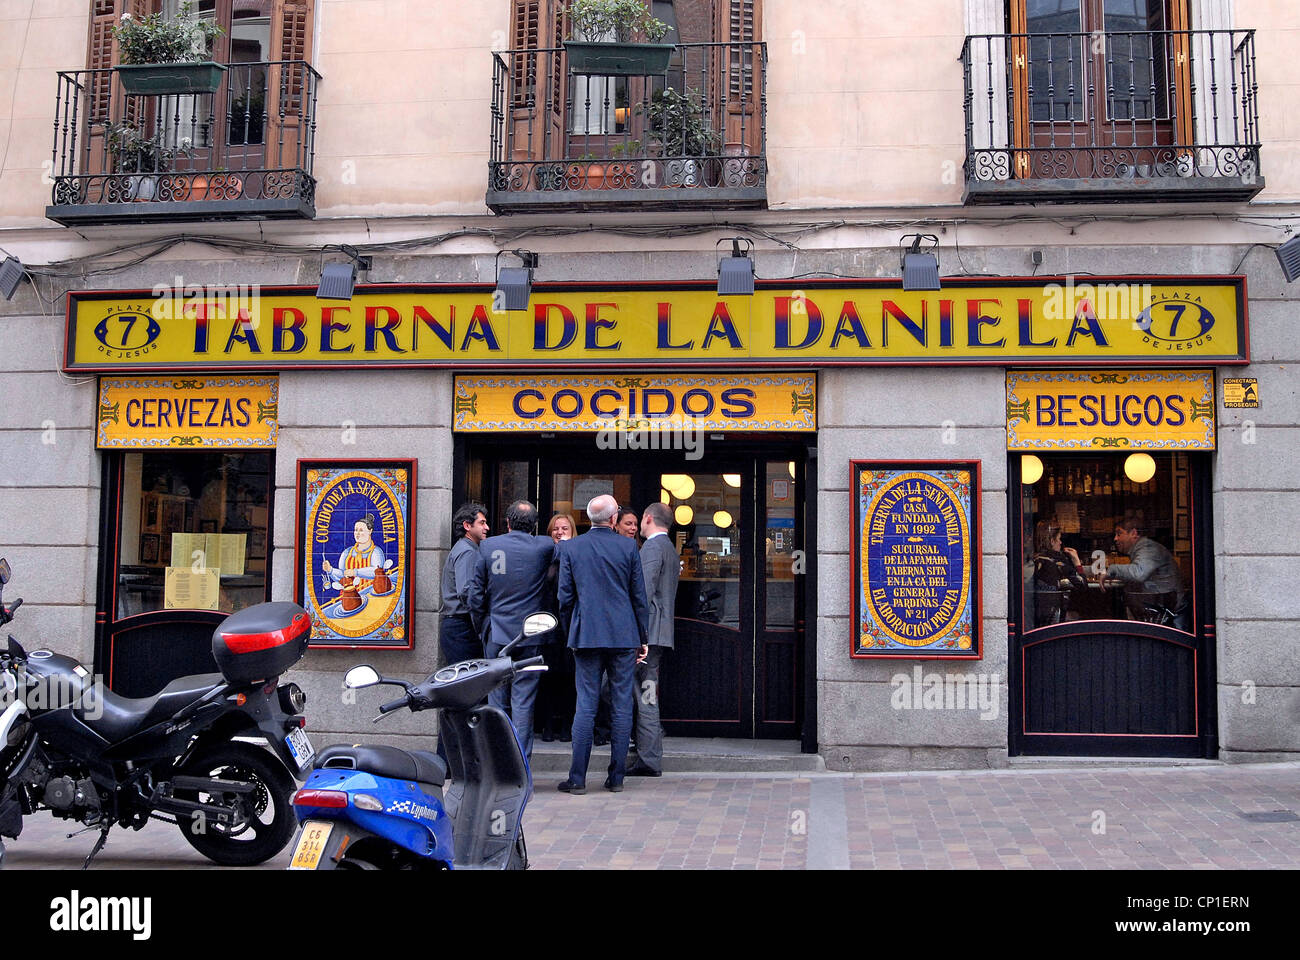 Taberna de la Daniela, tavern, pub, bar, Madrid, Spain Stock Photo